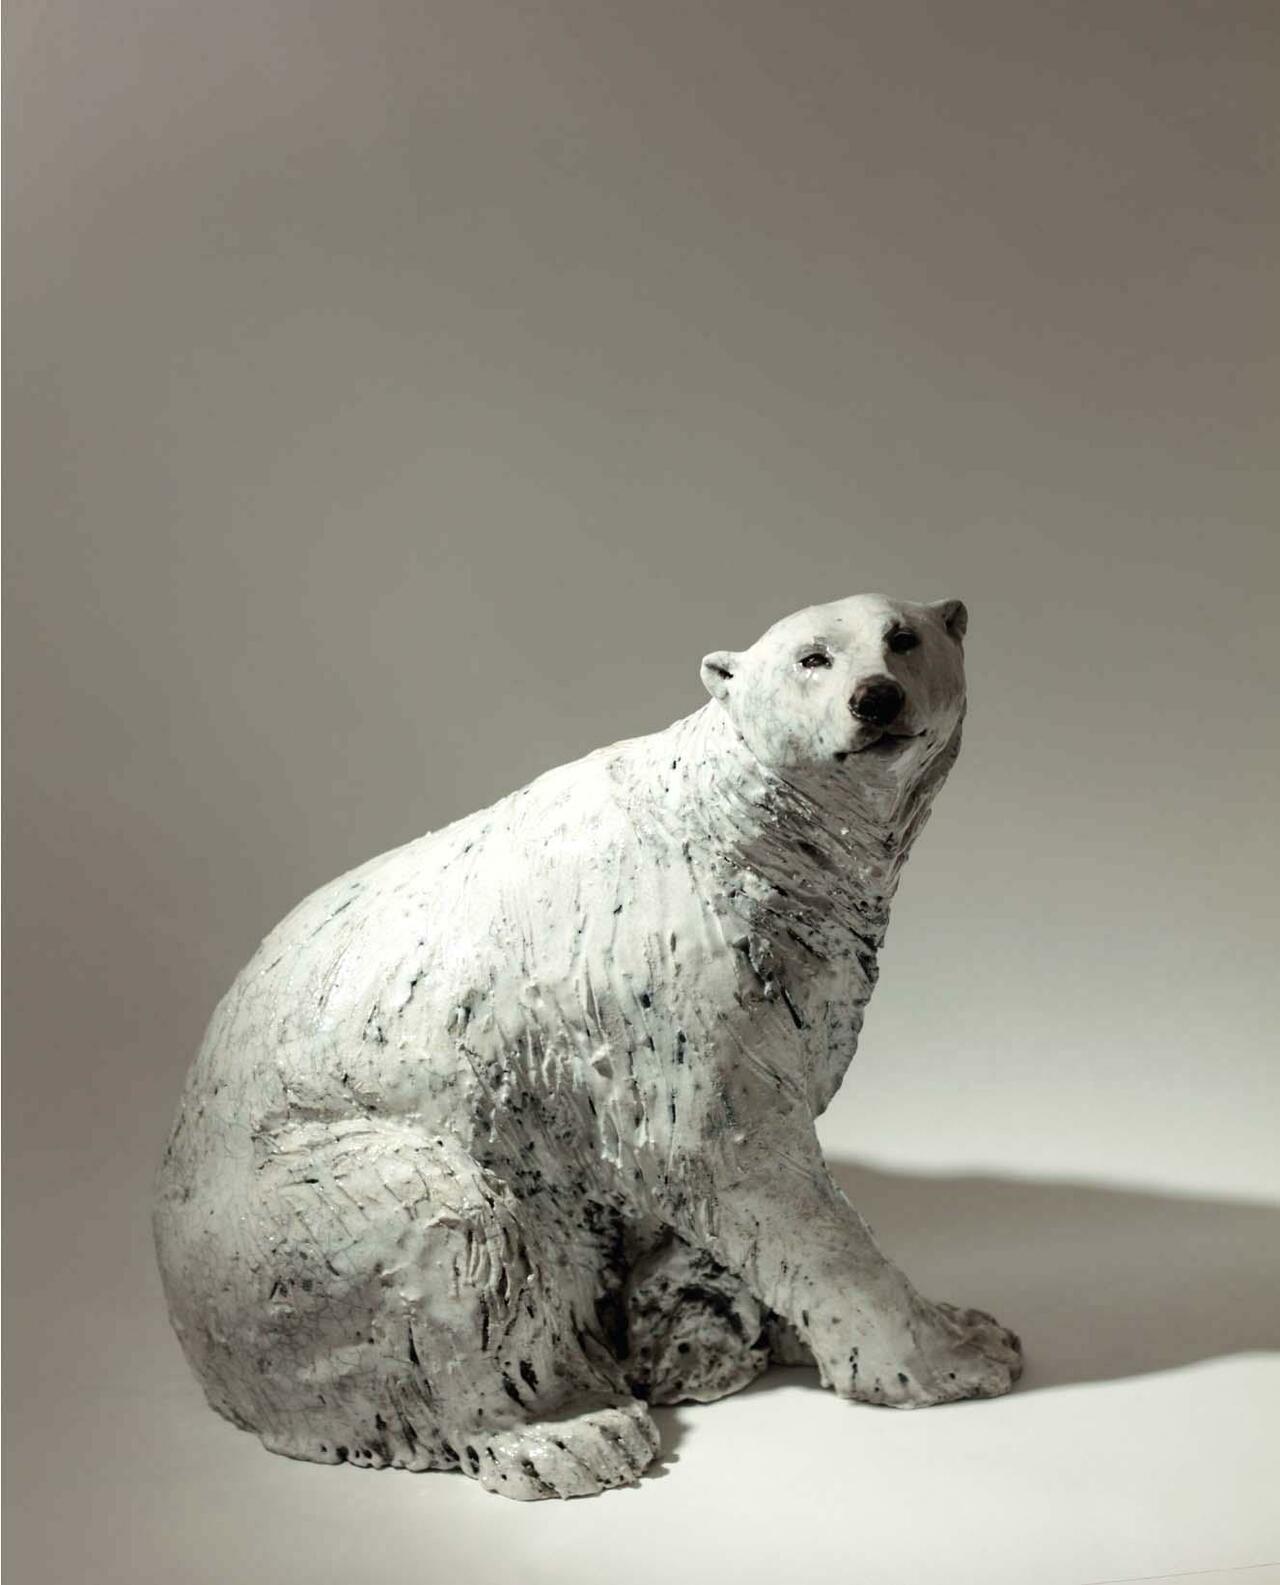 Nick Mackman's 'Sitting' and 'Reclining' Polar Bears are enjoying the chill here in Bath today! #Bath #art #ceramics http://t.co/zRxUZJHLv3